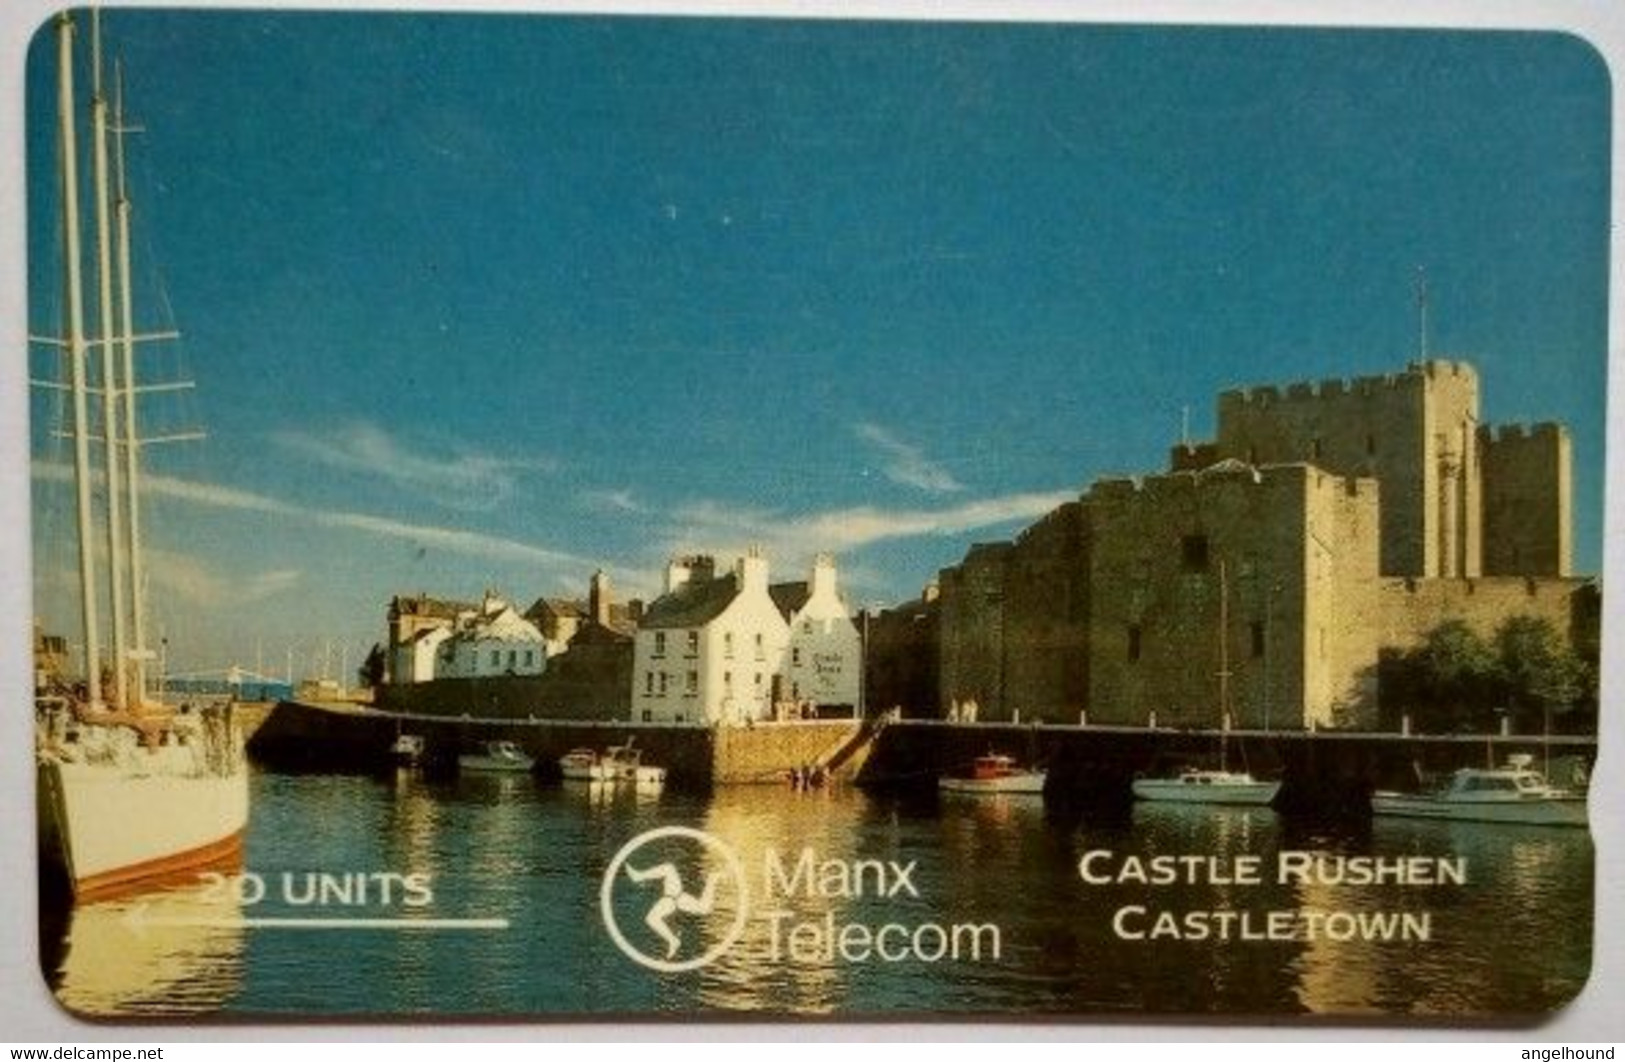 Isle Of Man Manx Telecom 20 Units 5IOMC " Castle Rushen " - Man (Isle Of)